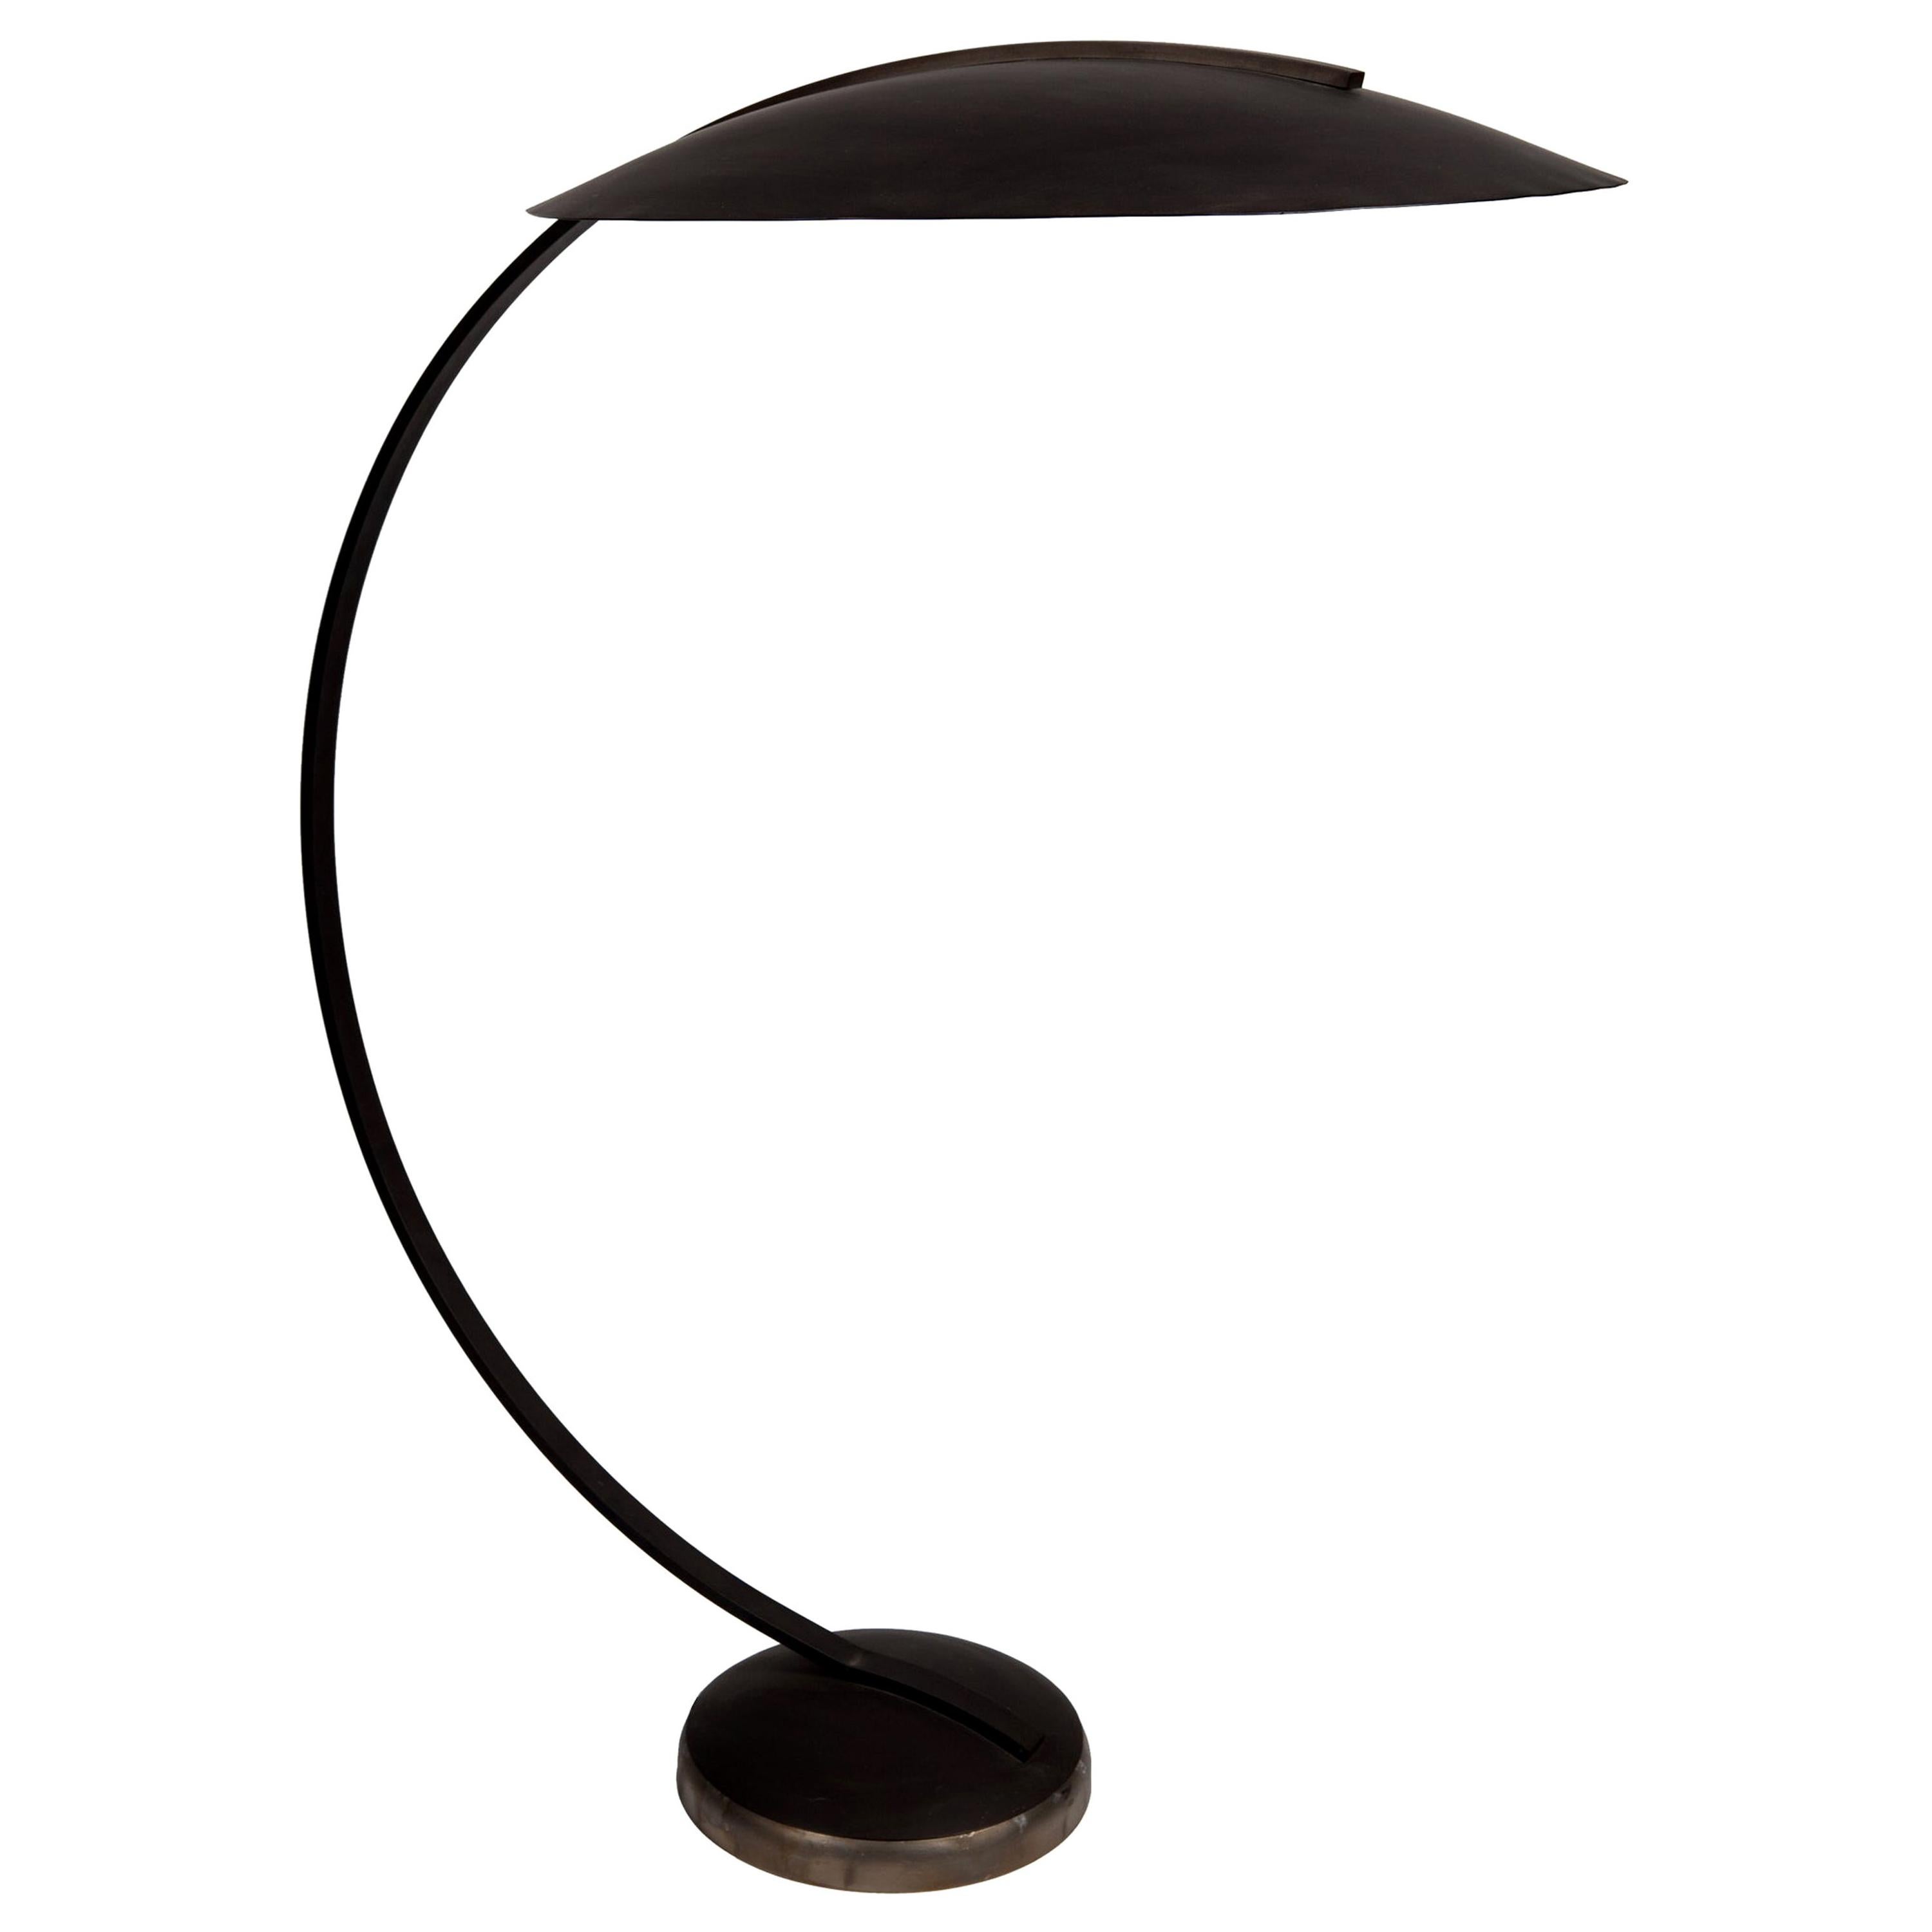 Bend-It Floor Lamp by Atelier Boucquet